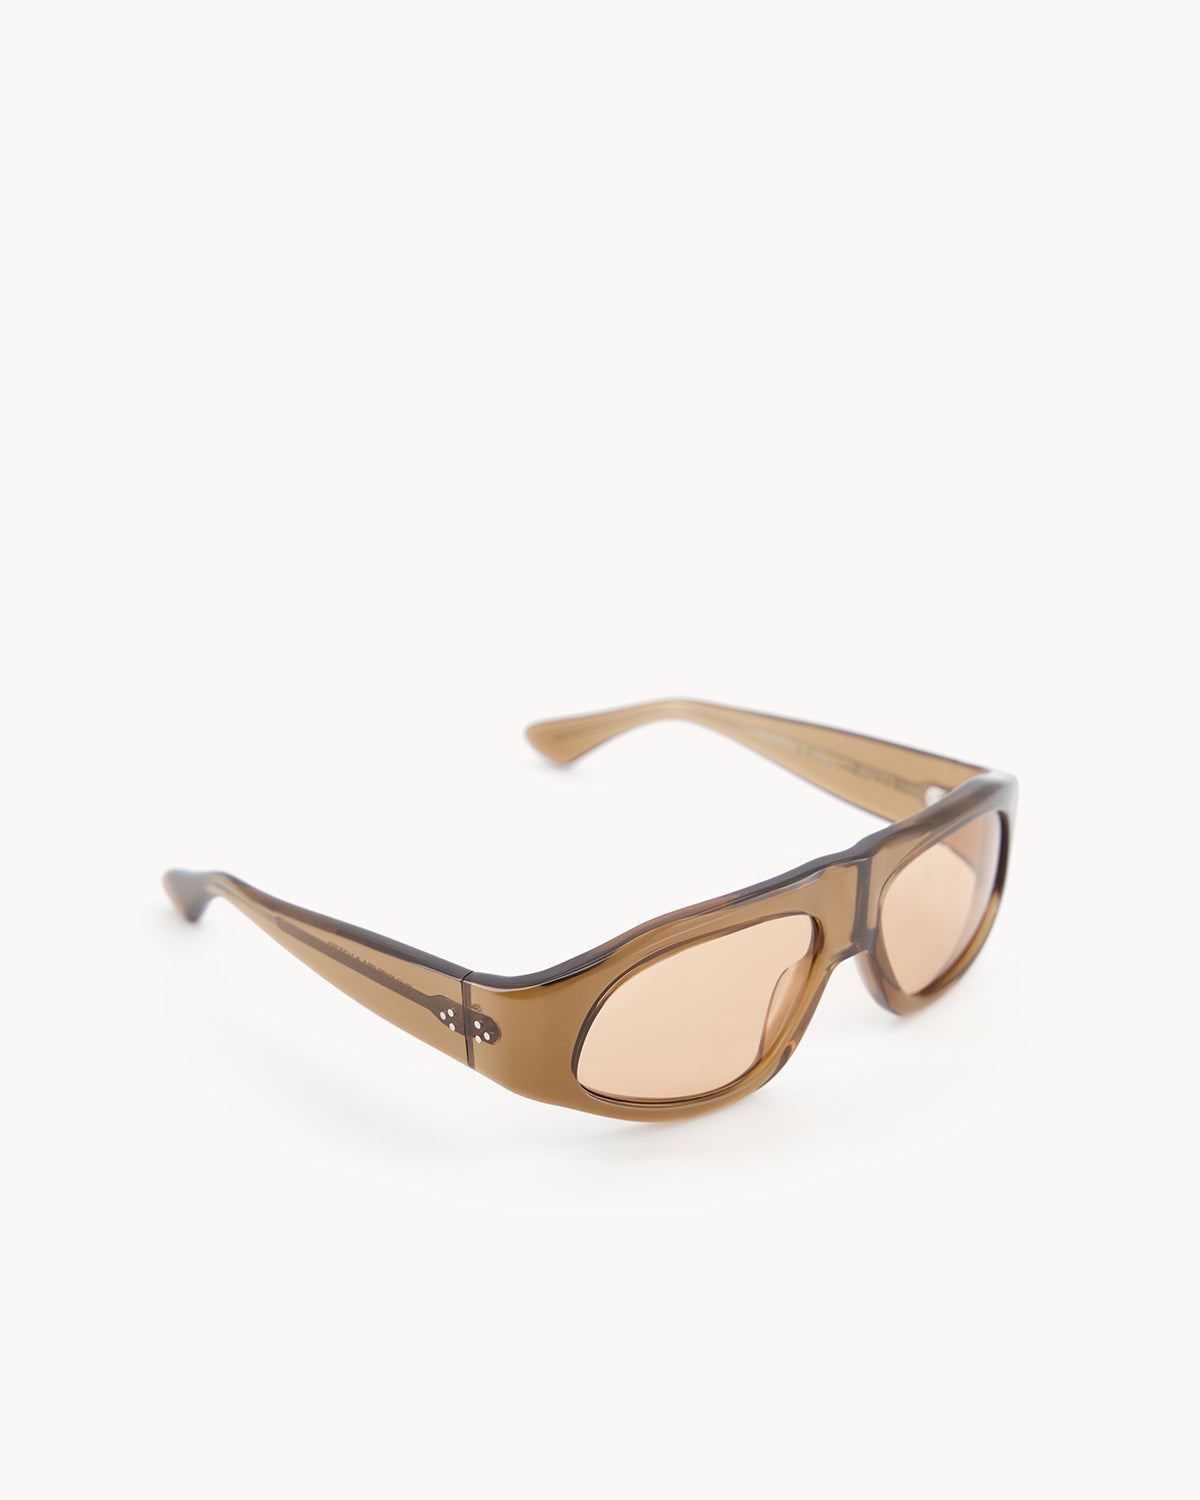 Port Tanger Irfan Sunglasses in Manuka Acetate and Amber Lenses 2